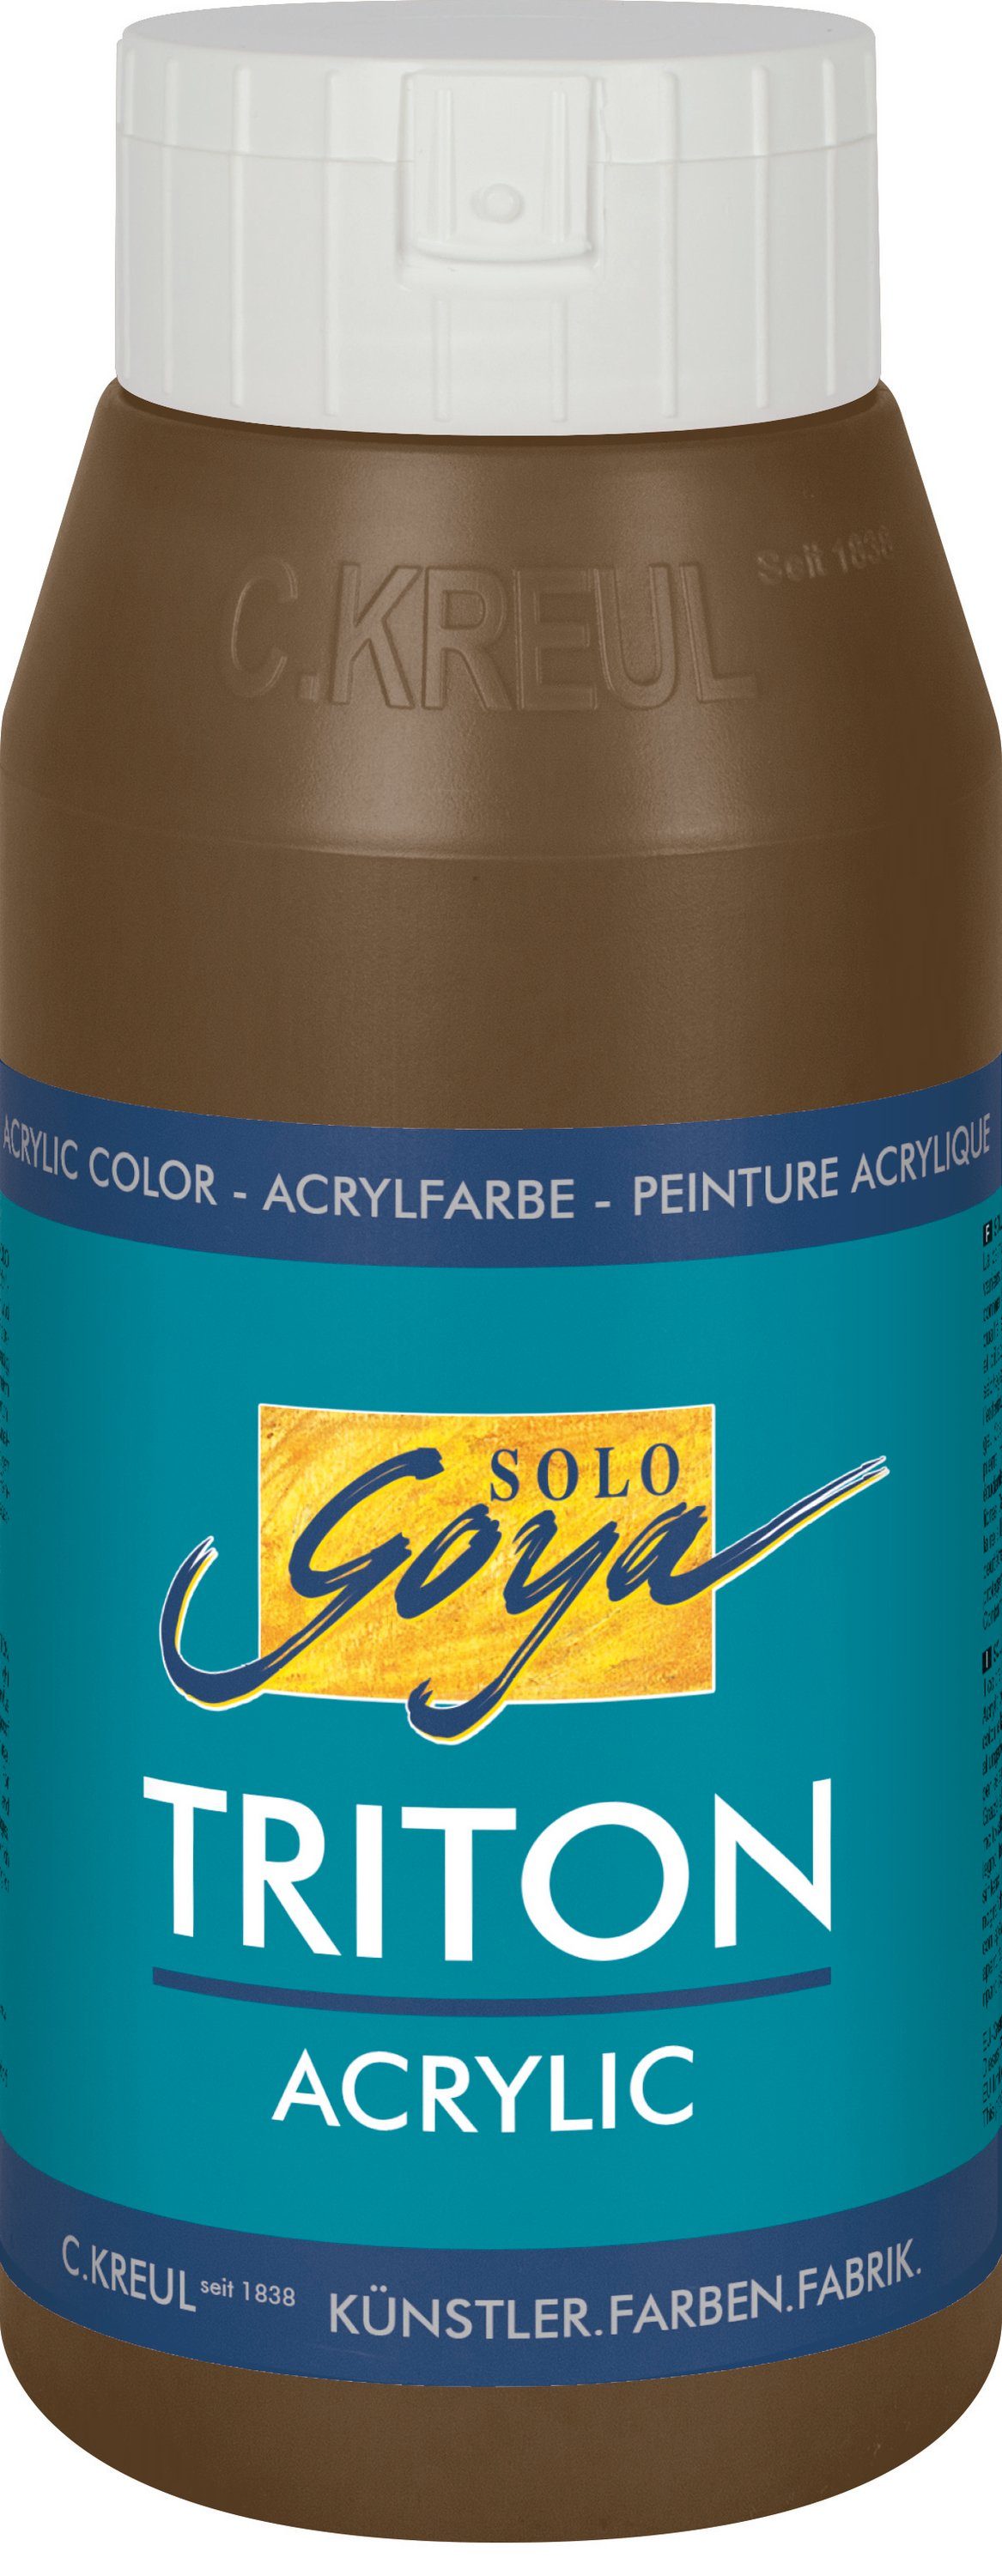 Kreul Acrylfarbe Solo Goya Havannabraun 750 Acrylic, ml Triton